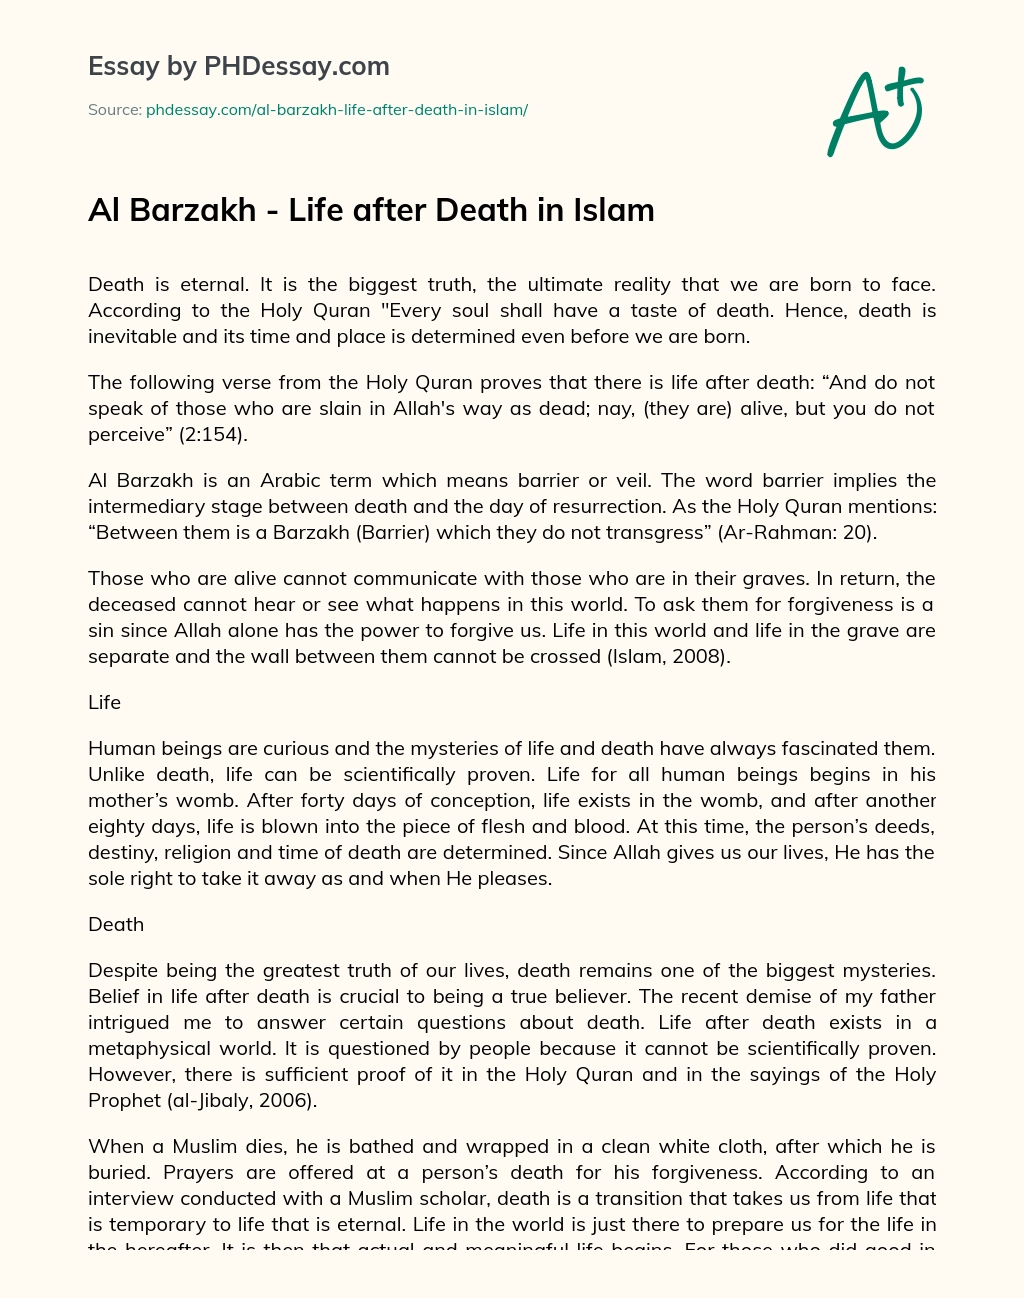 Al Barzakh – Life after Death in Islam essay